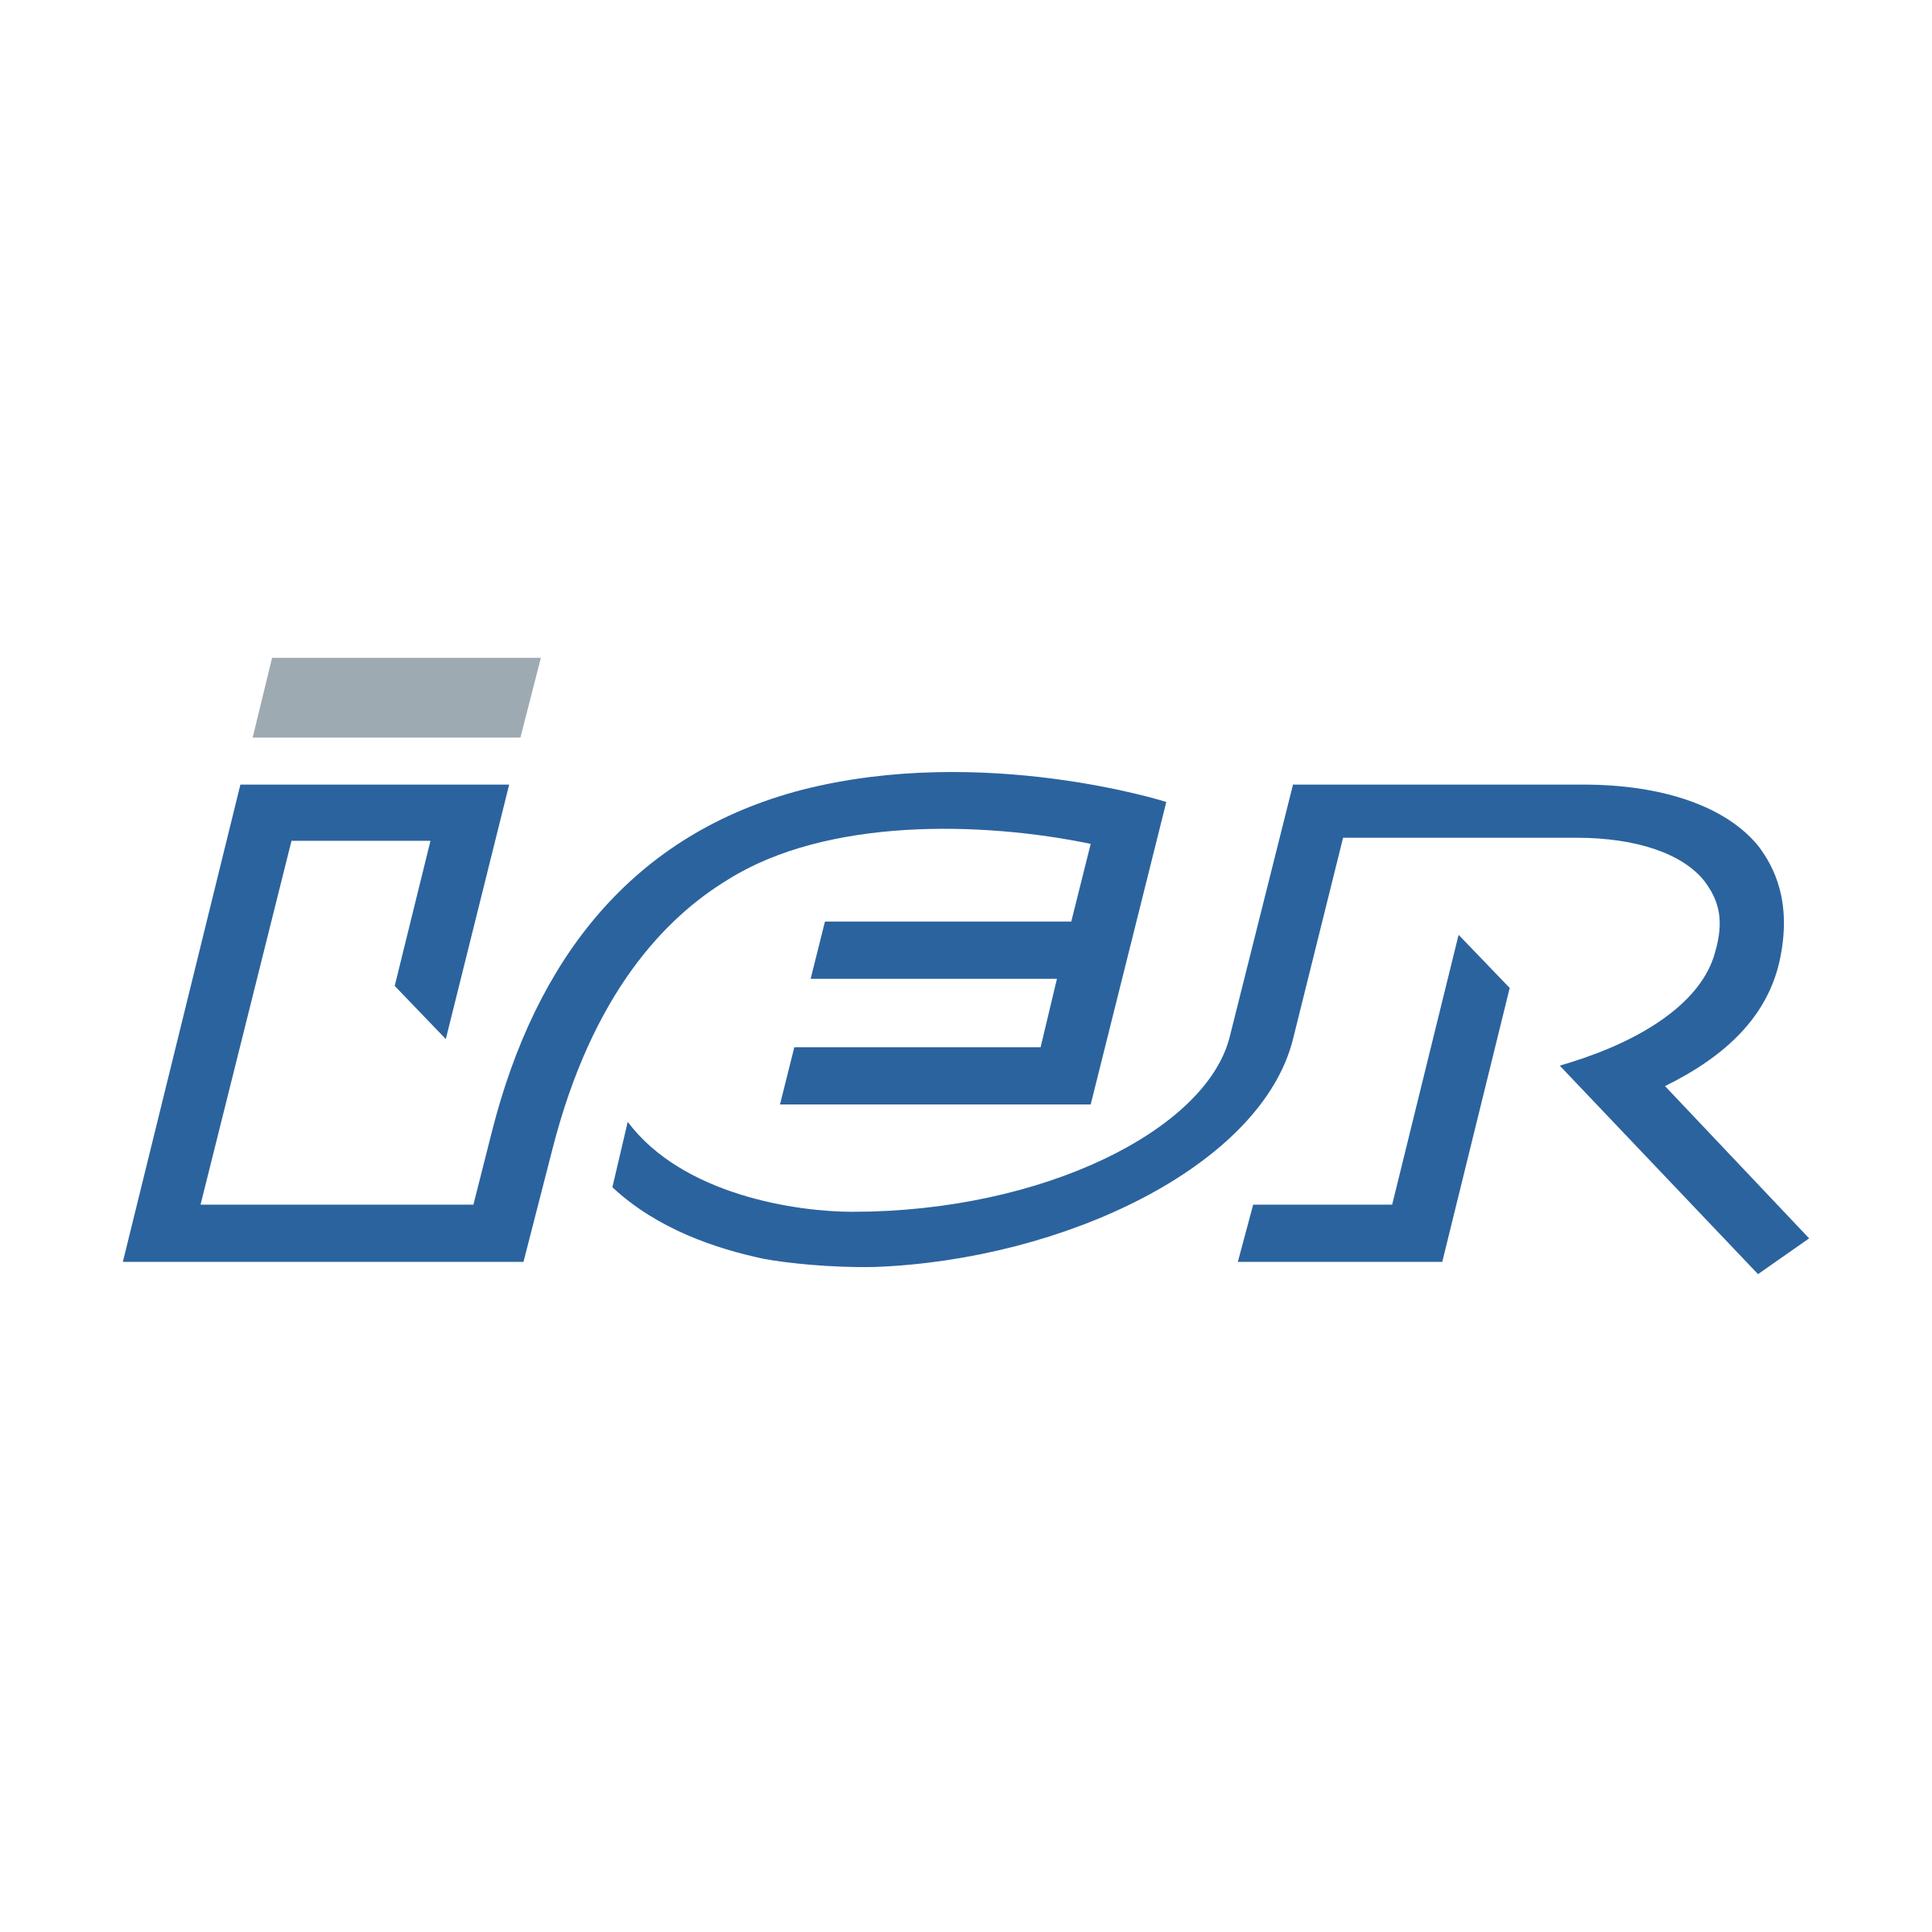 ier-1-logo-png-transparent.png